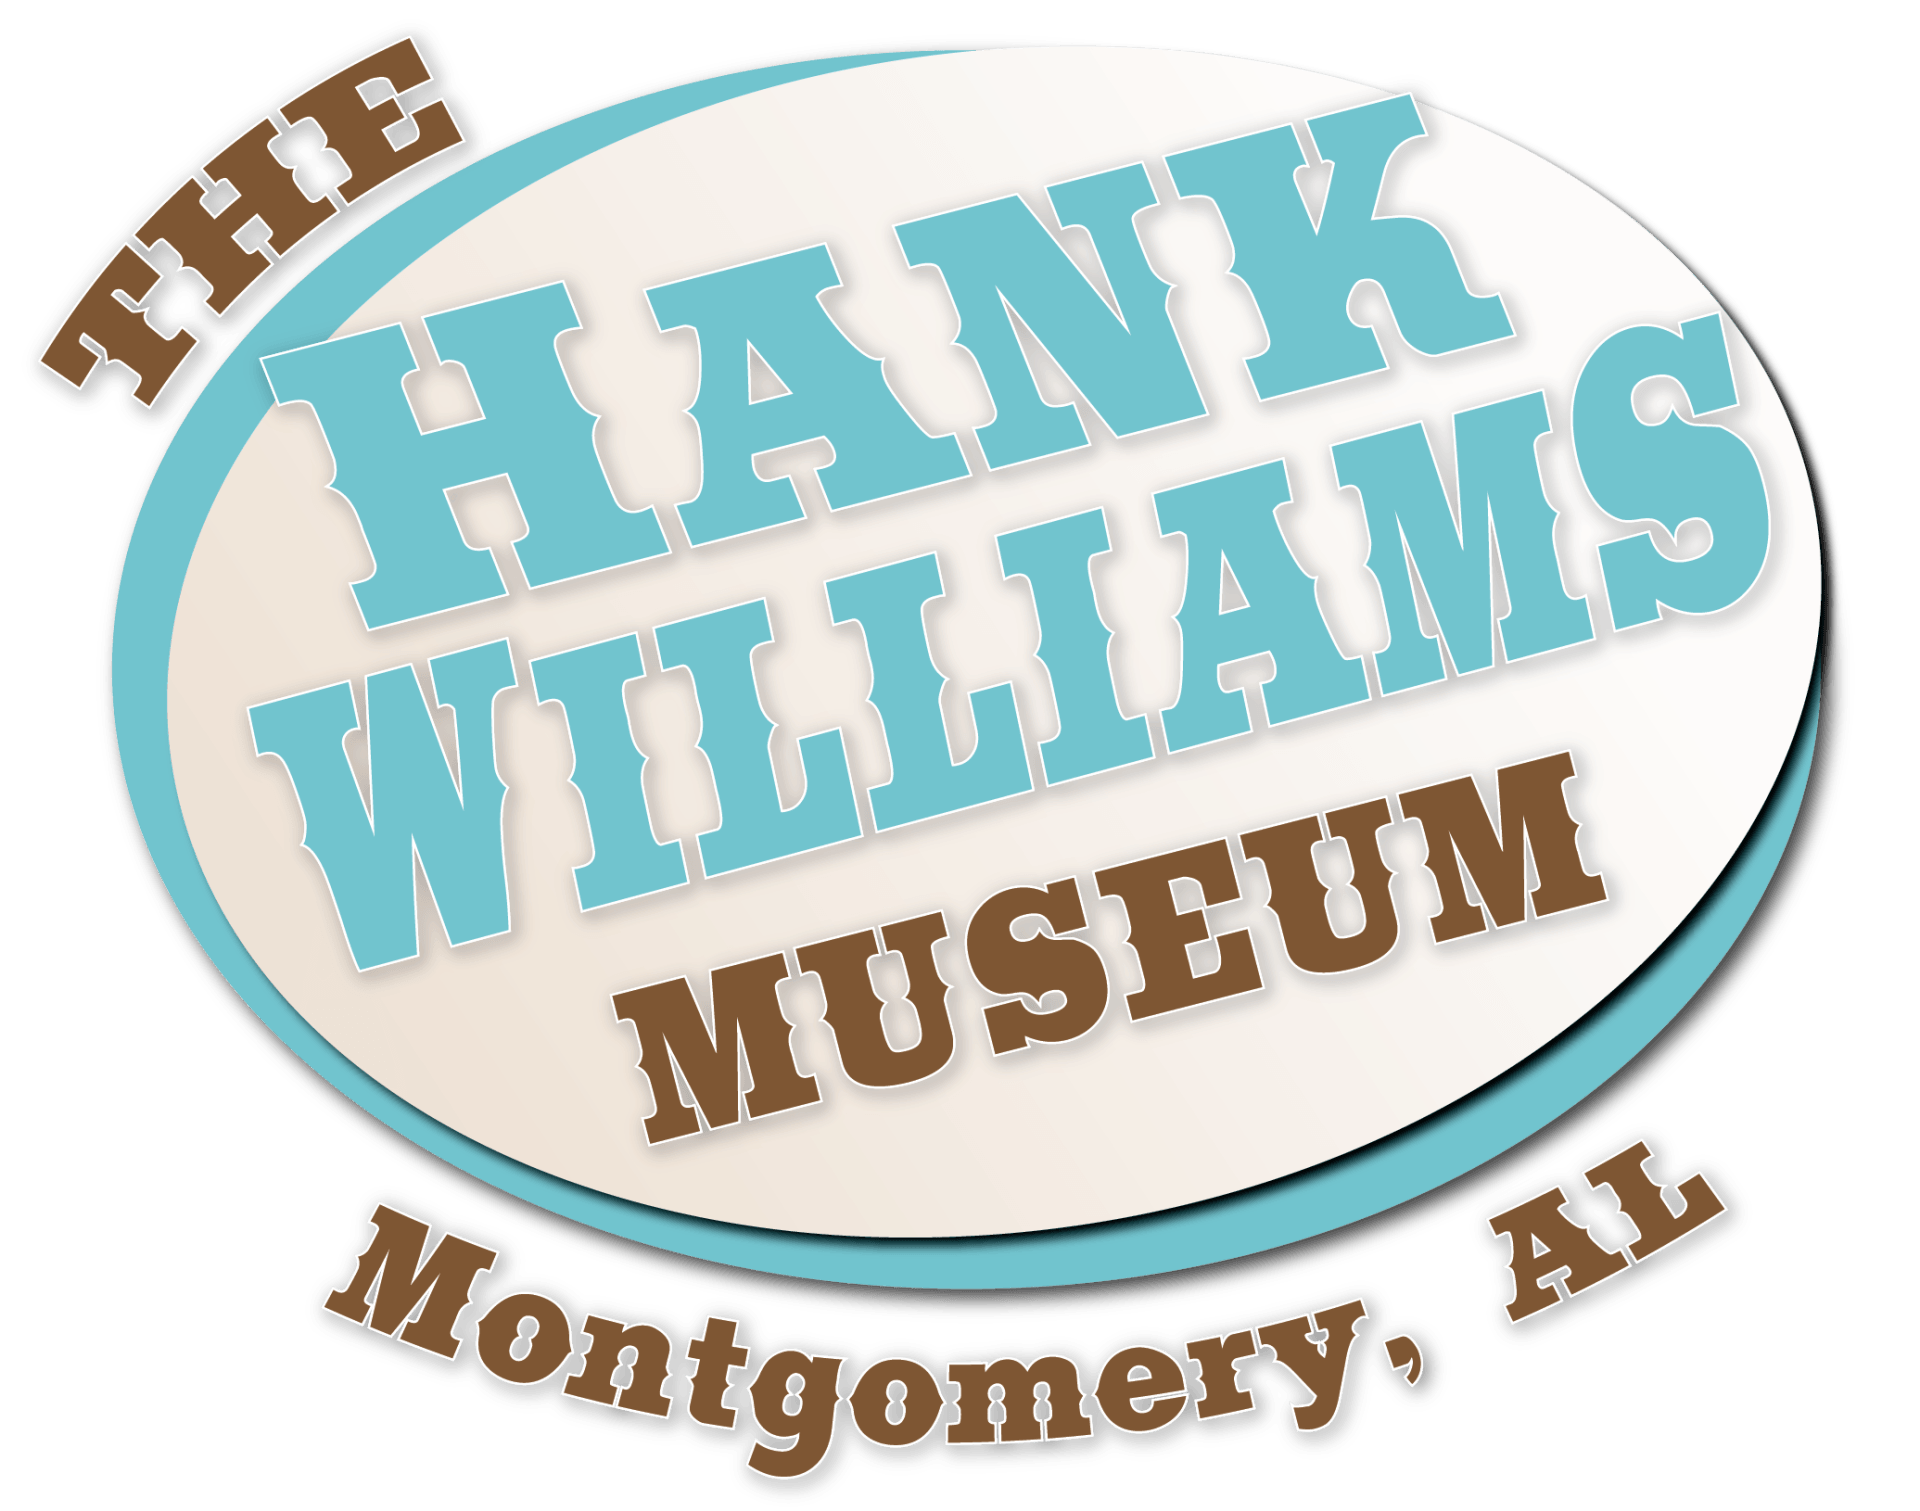 www.thehankwilliamsmuseum.net